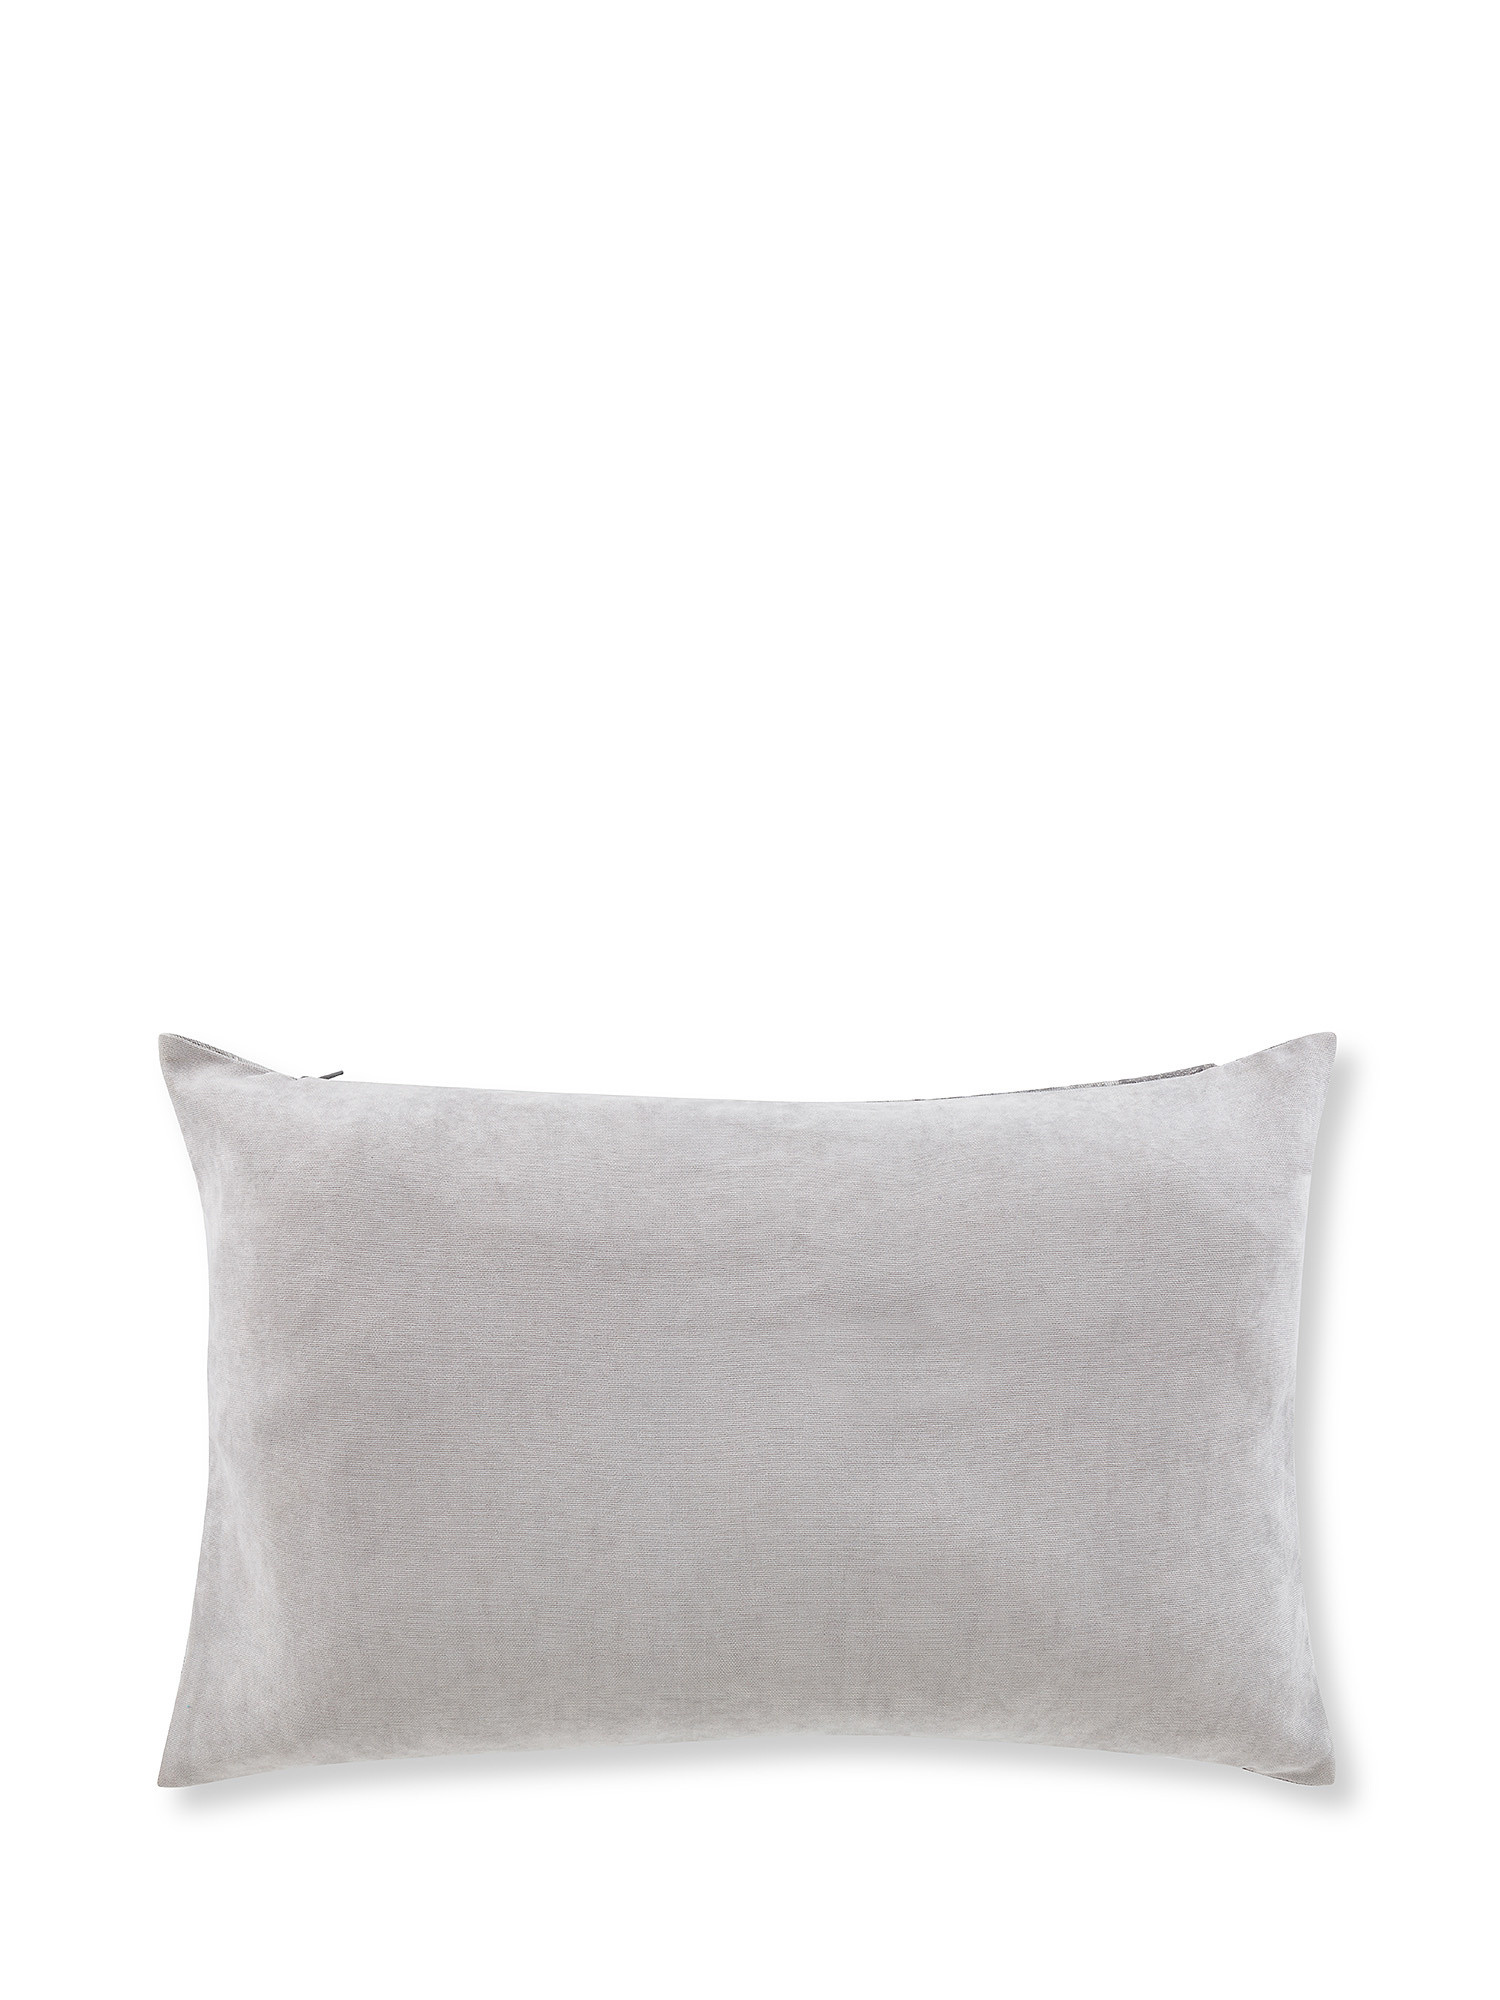 Jacquard cushion with flower motif 35x55cm, Grey, large image number 1